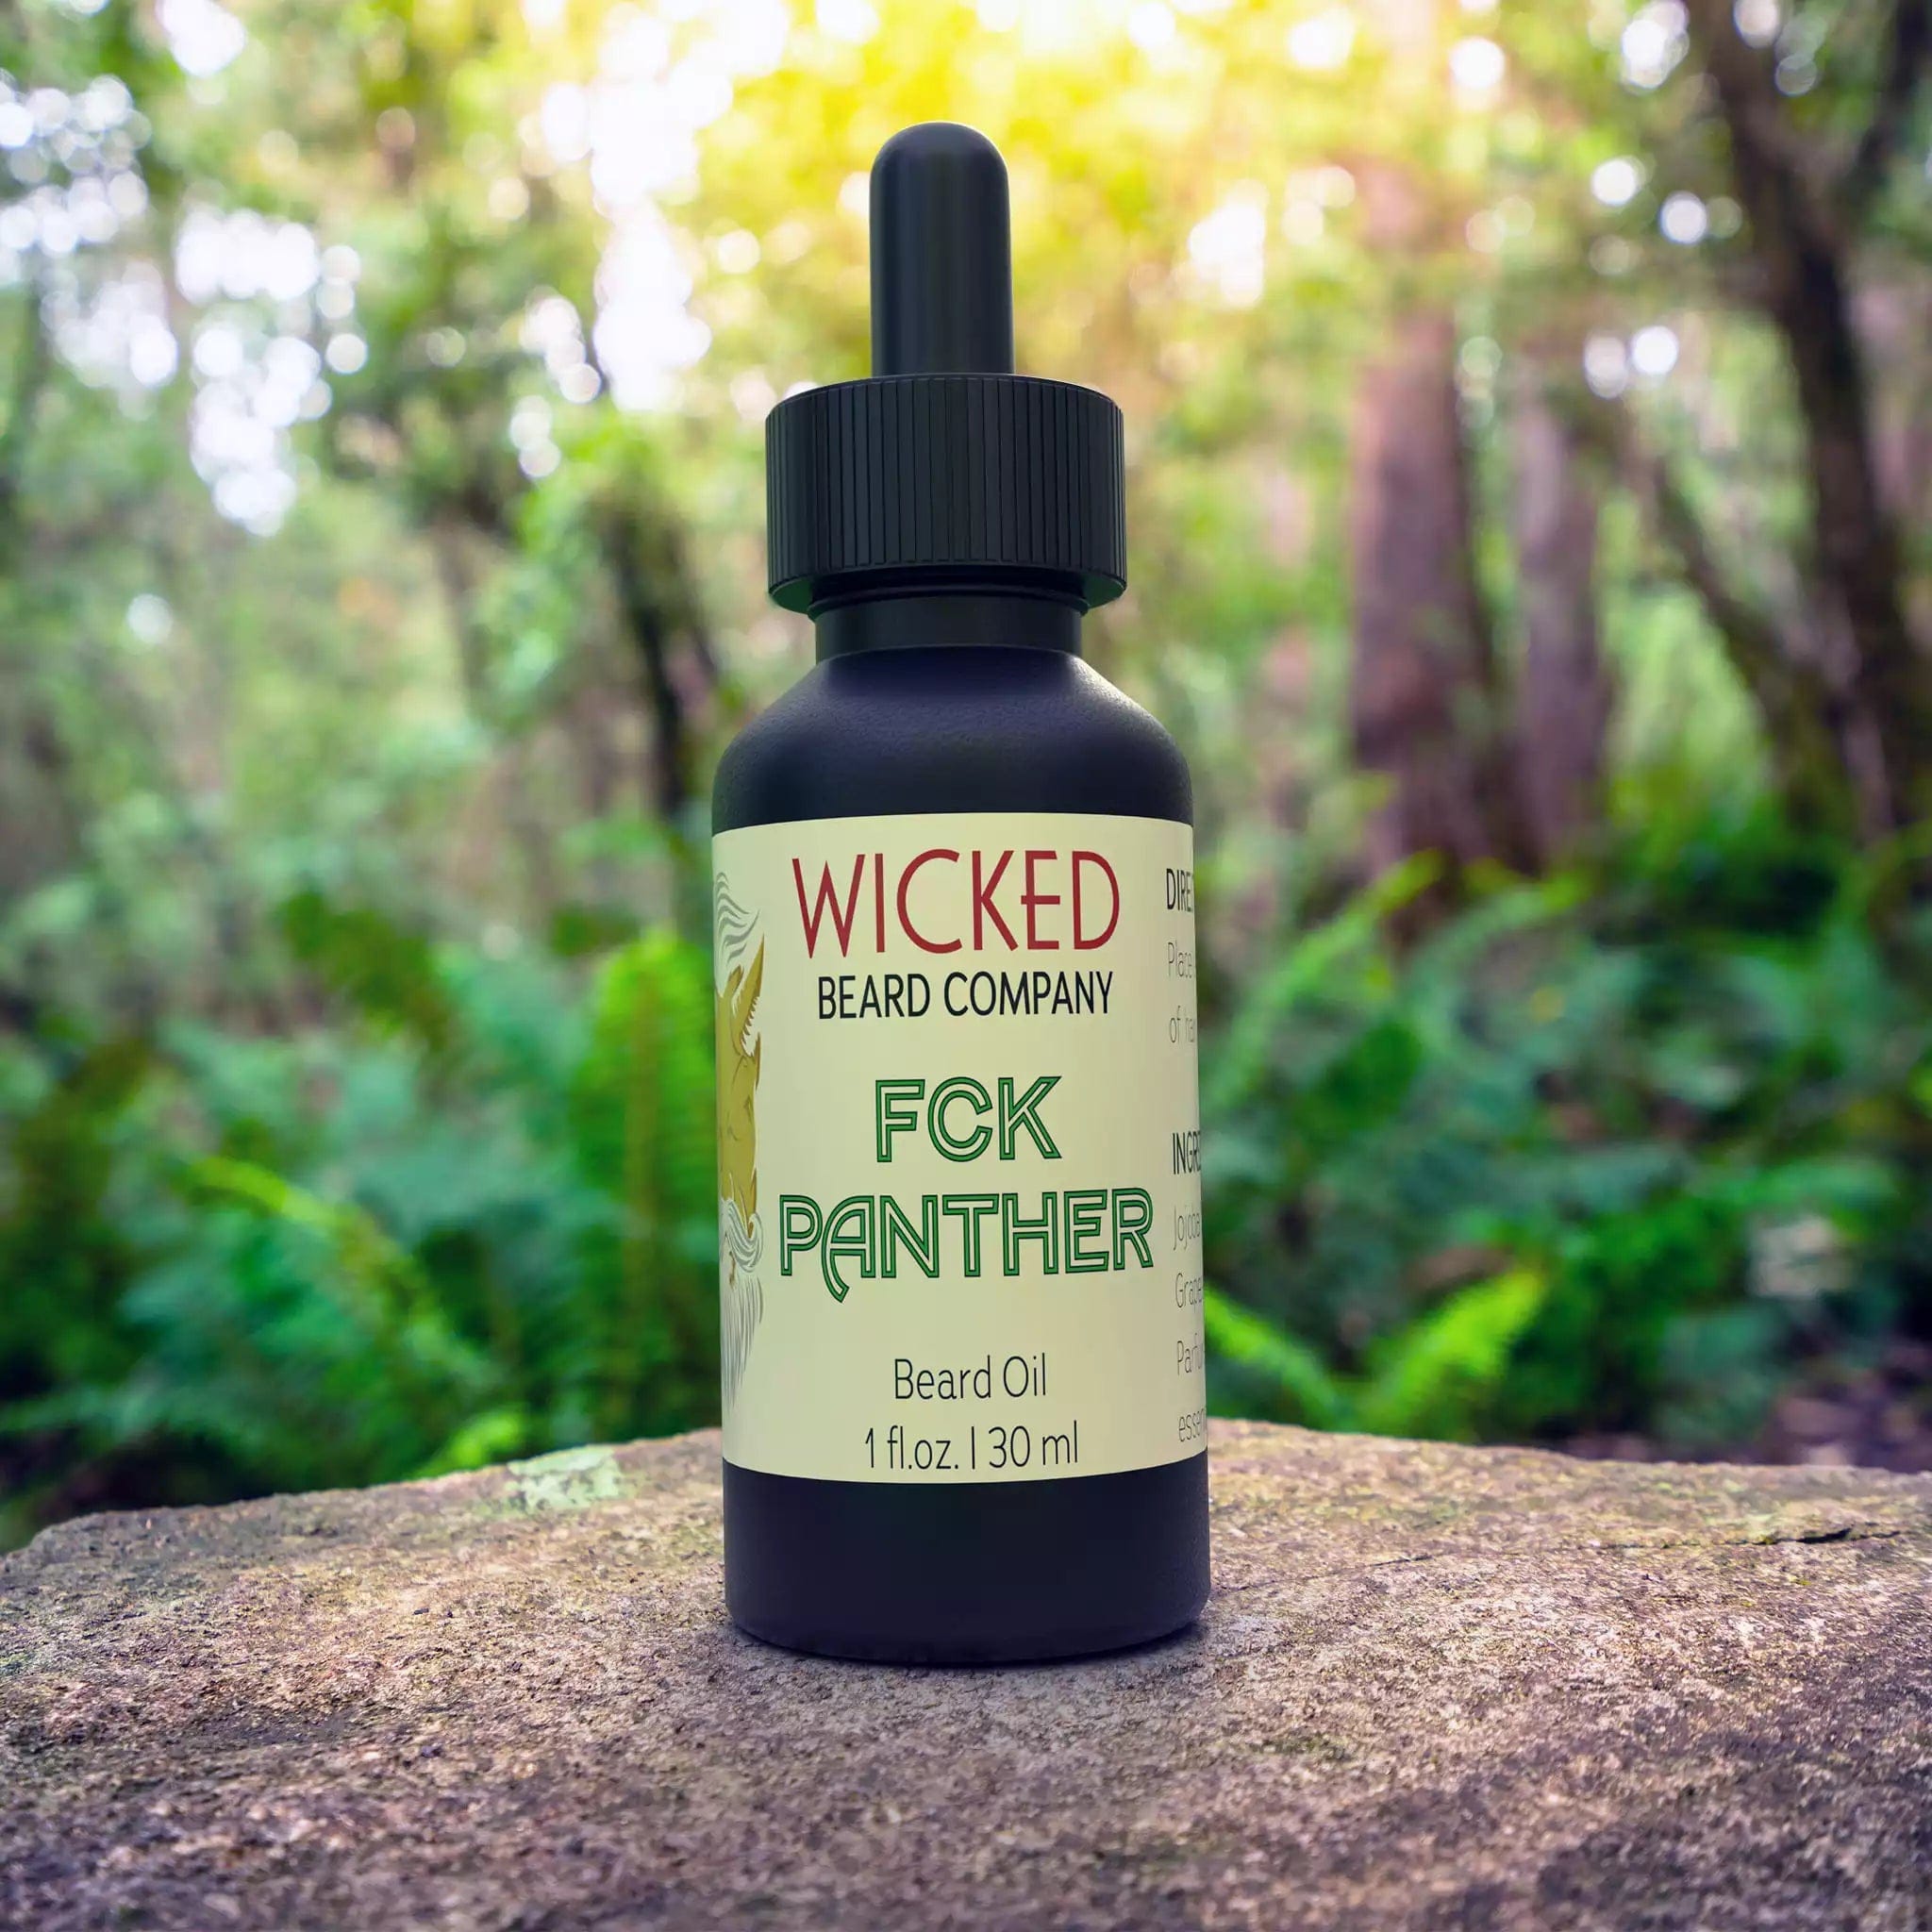 Wicked Beard Company Fck Panther Beard Oil